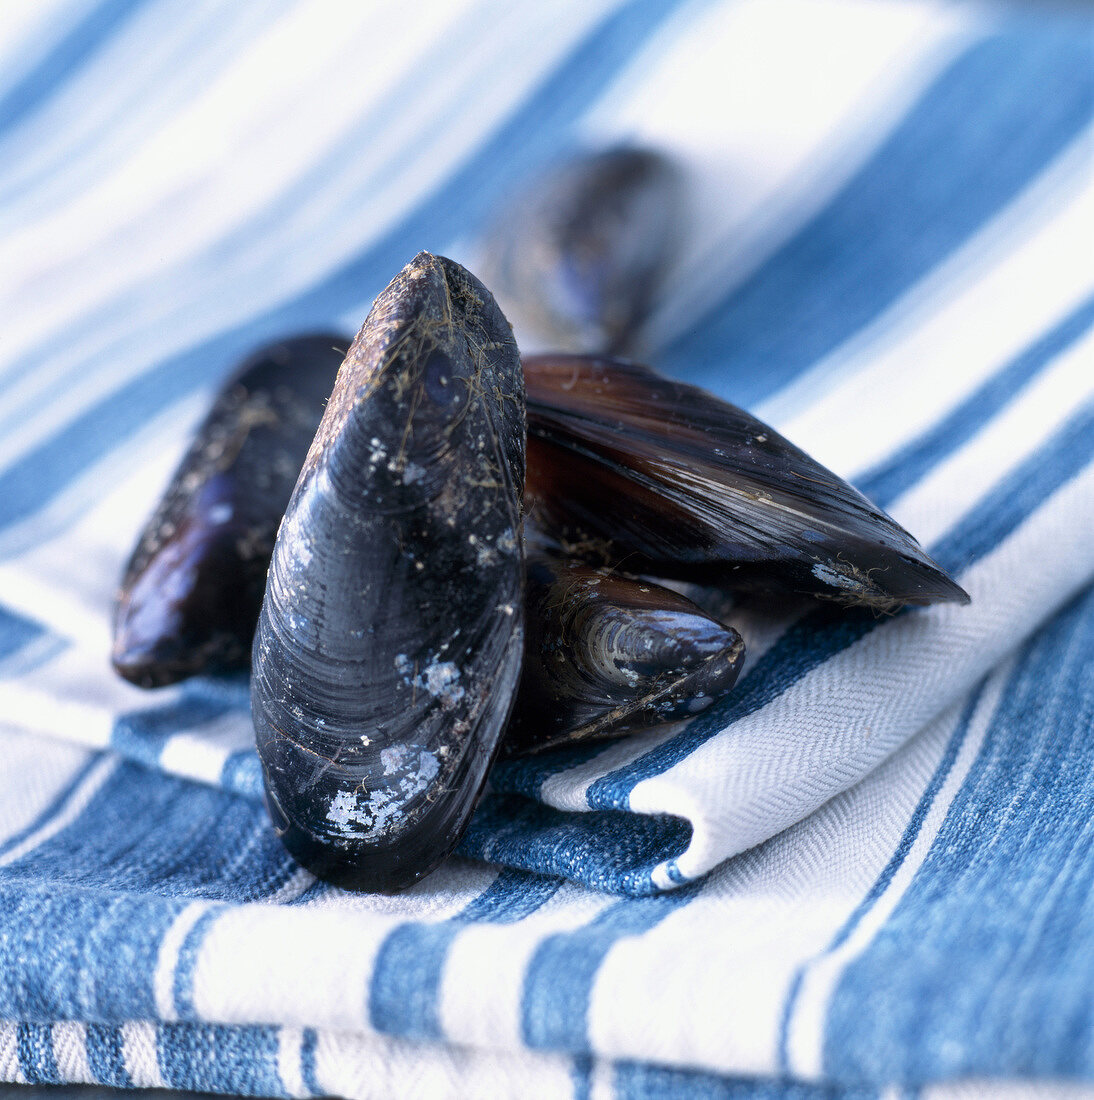 Mussels on tea towel